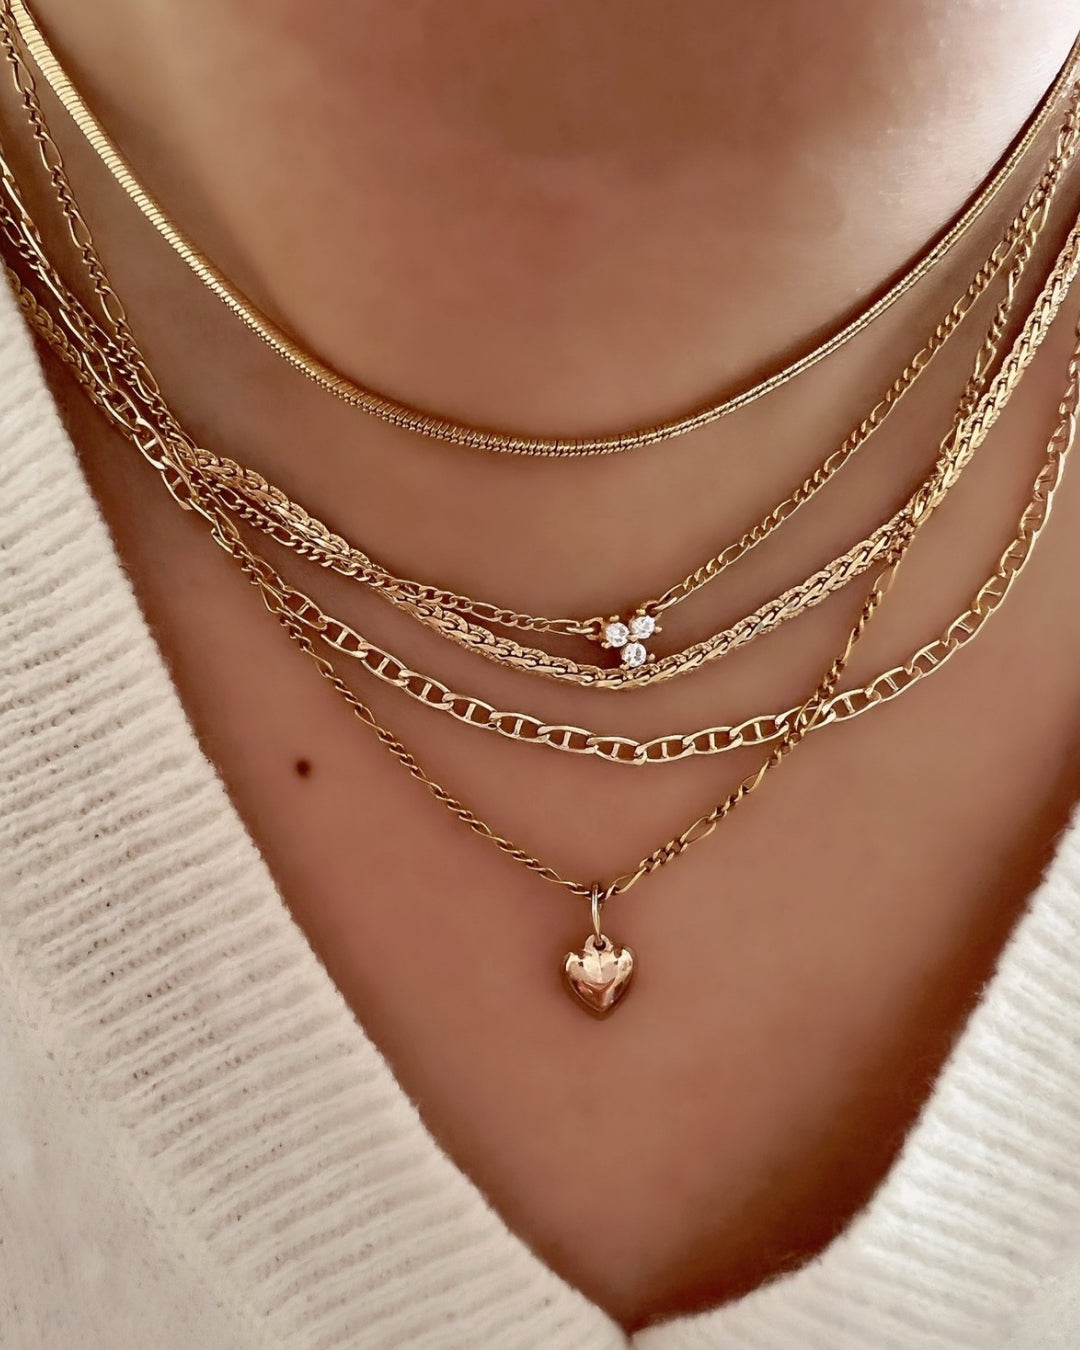 Gold Petite Lace Choker Necklace on a model